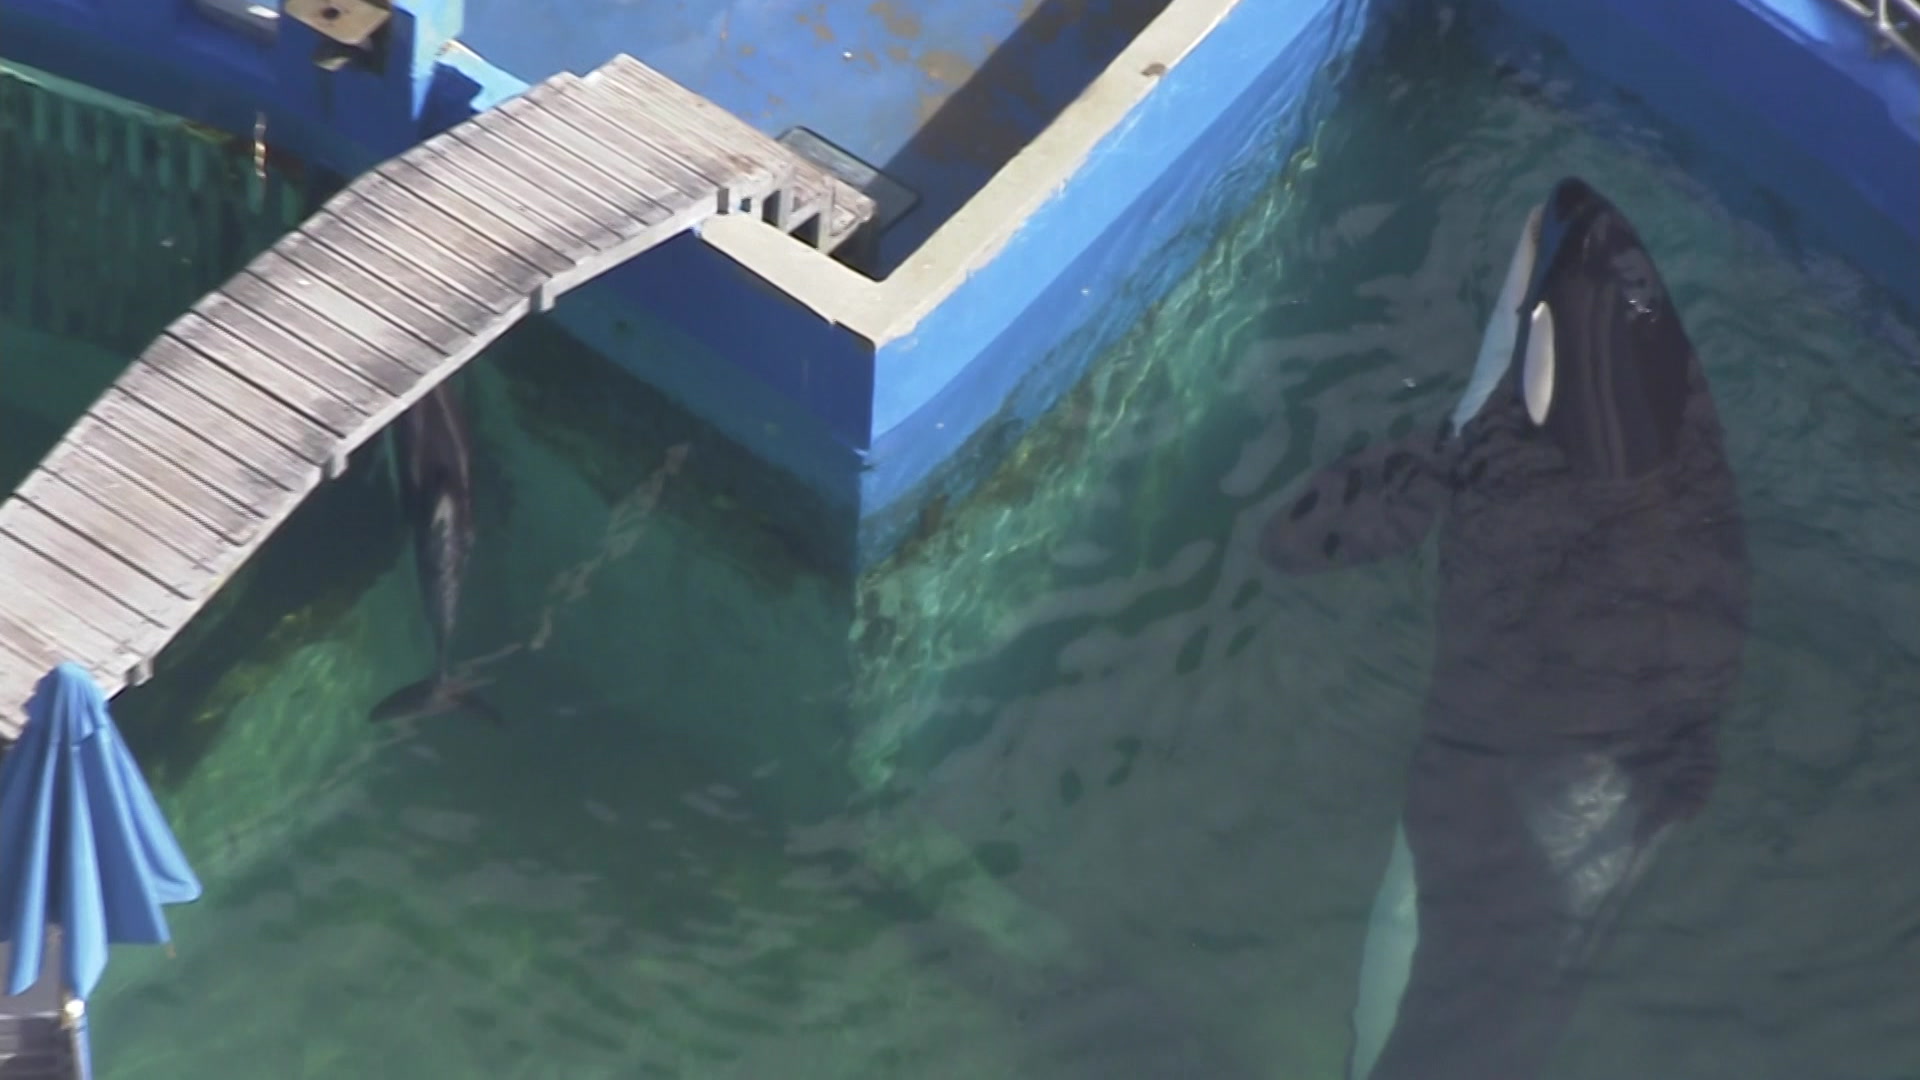 Lolita ‘Feeling Better’ At Miami Seaquarium Despite PETA Claims Killer Whale Is ‘Deathly Sick’